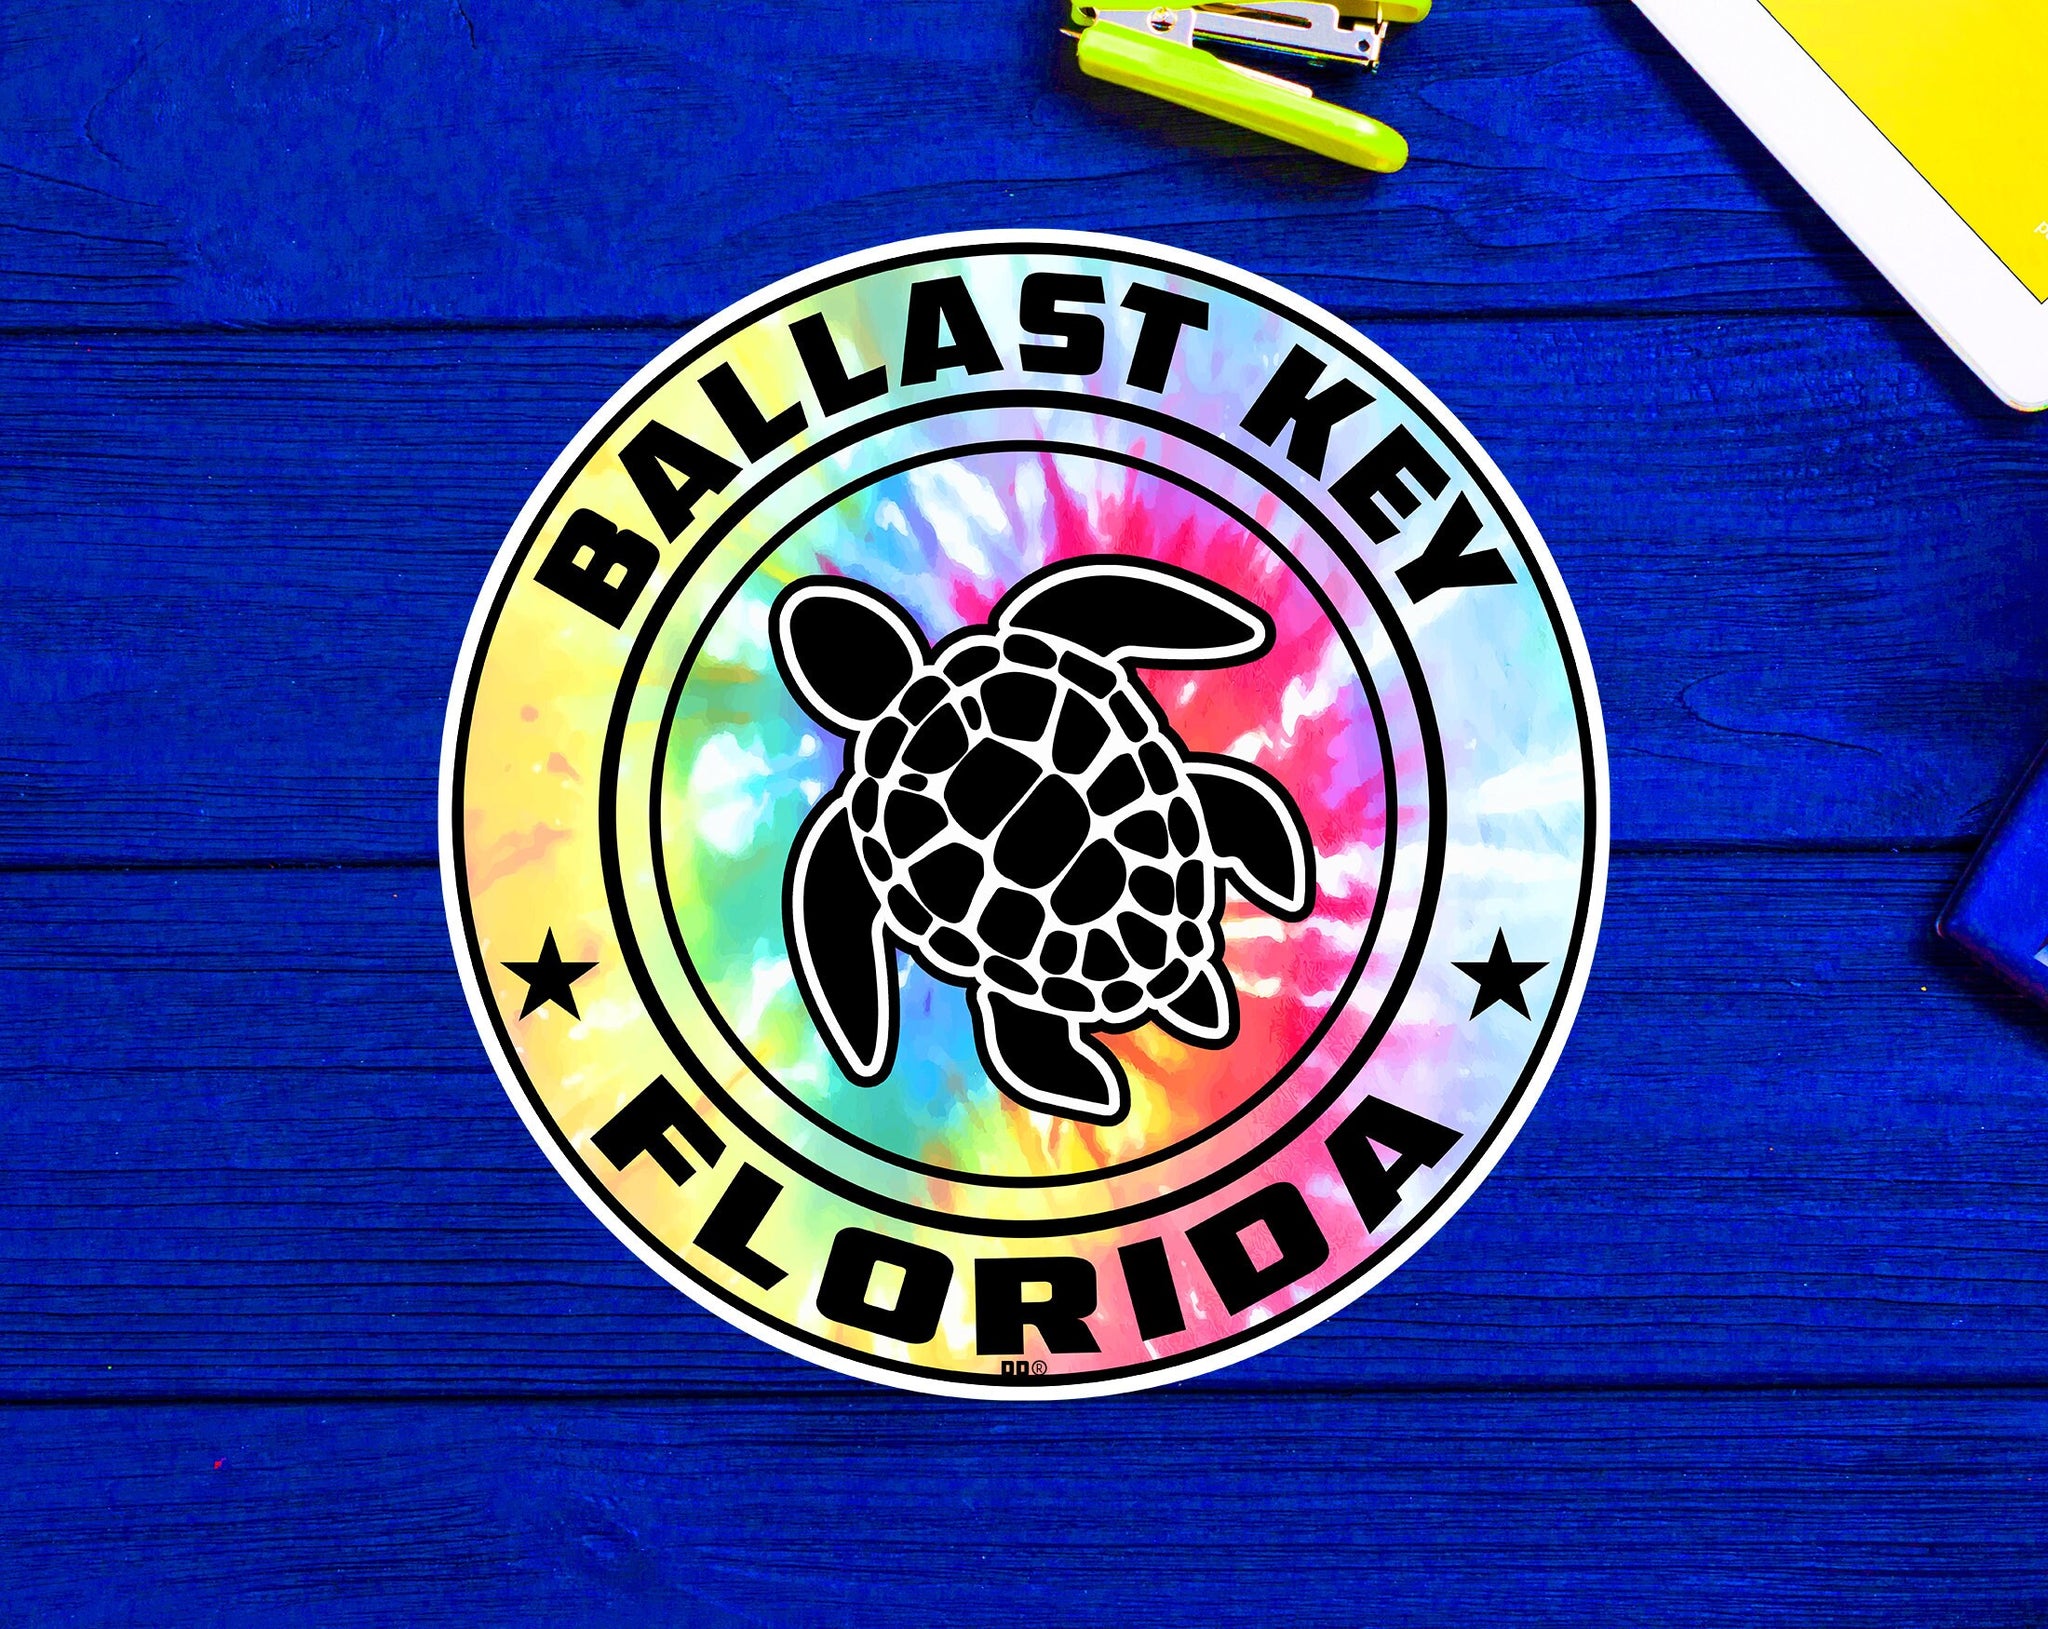 Ballast Key Florida Beach Sticker Decal 3" Vinyl